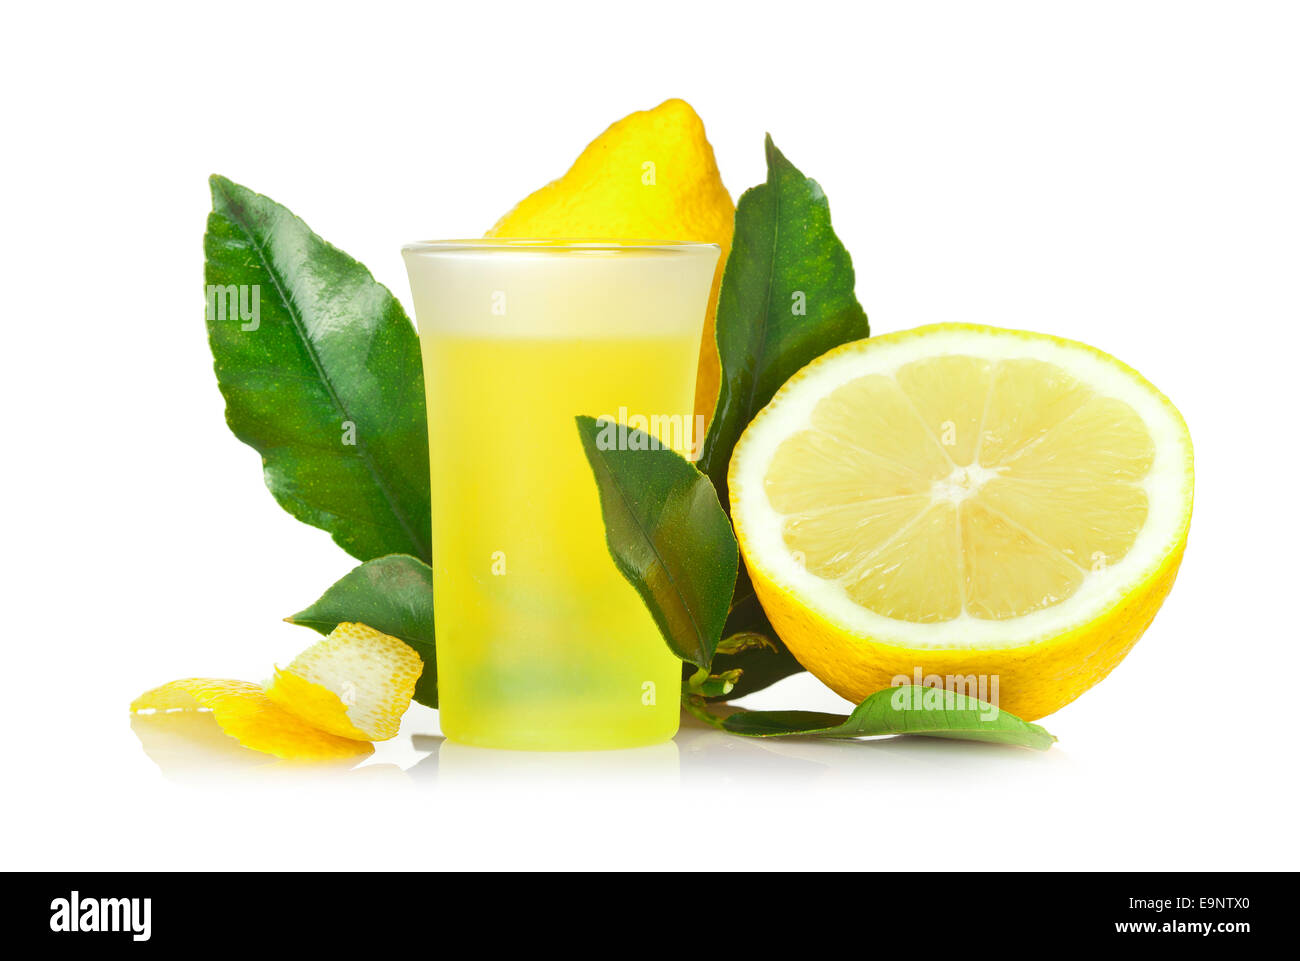 https://c8.alamy.com/comp/E9NTX0/limoncello-italian-liqueur-lemon-on-white-background-E9NTX0.jpg